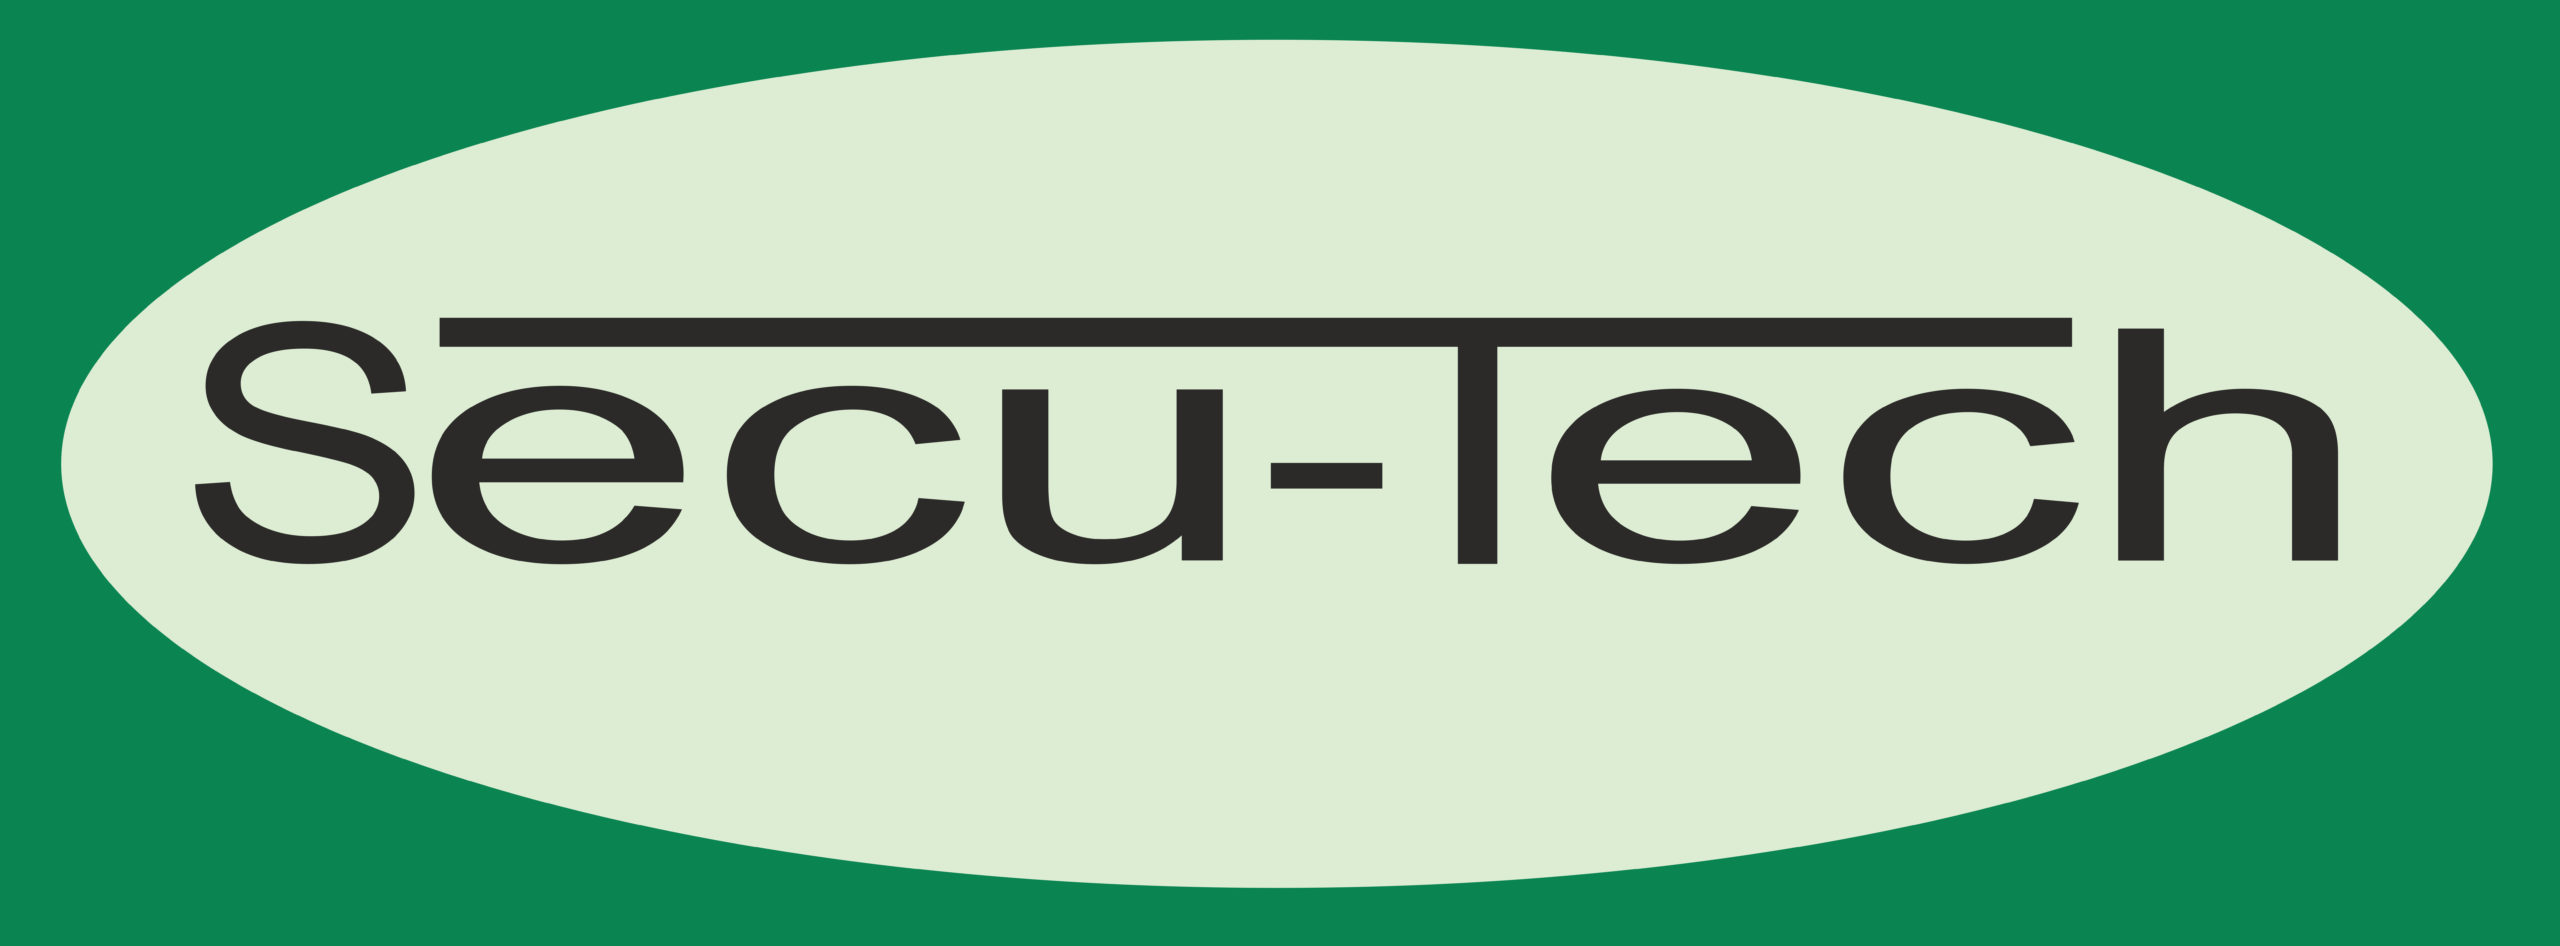 Secu-Tech логотип